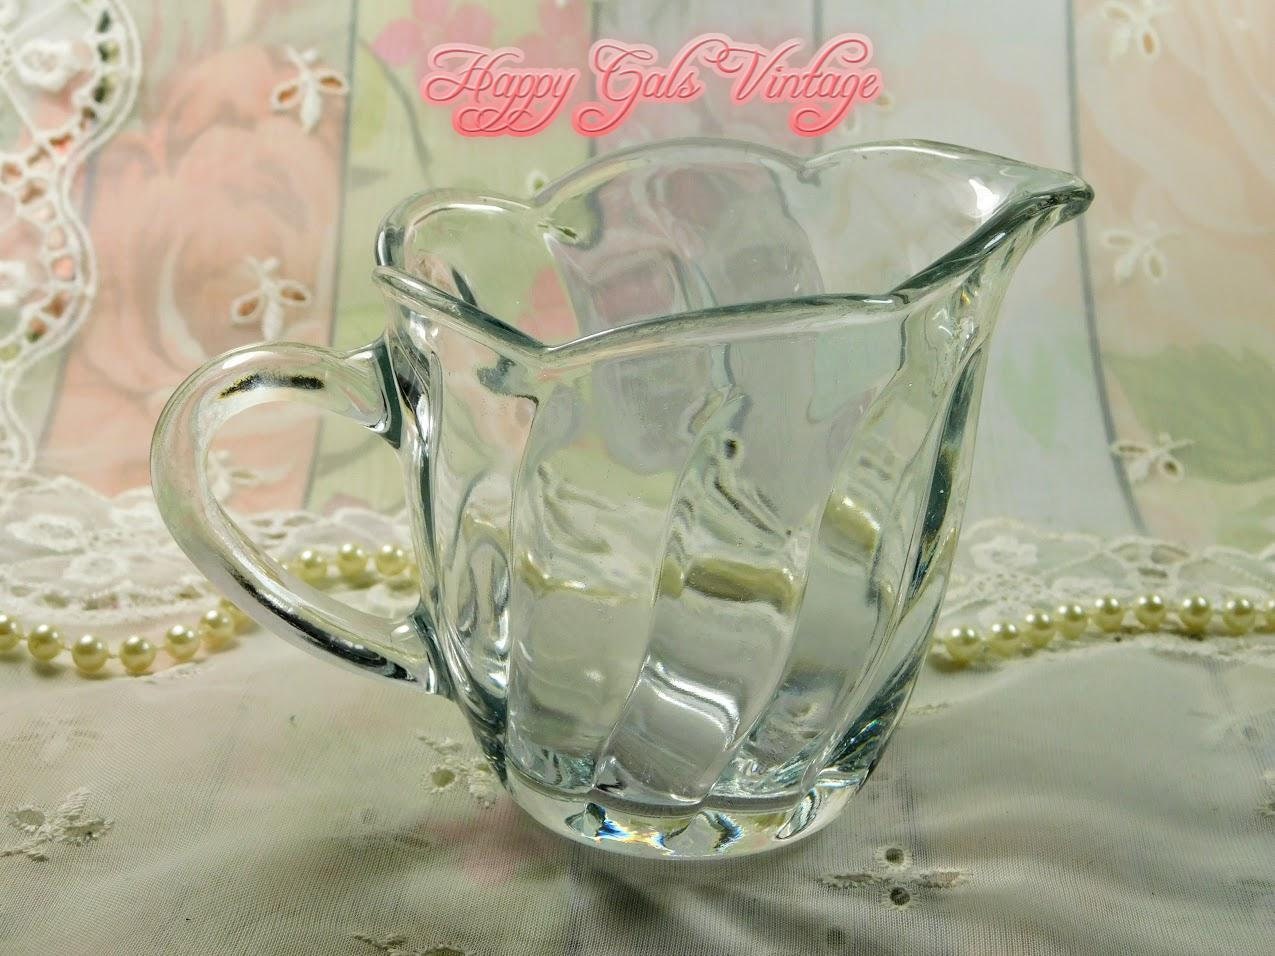 Leinuosen 2 Pcs Small Glass Pitcher Elegant Shaped Crystal Glass Creamer Pitcher Glass Tea Pitcher Coffee Milk Creamer Pitcher Creative M